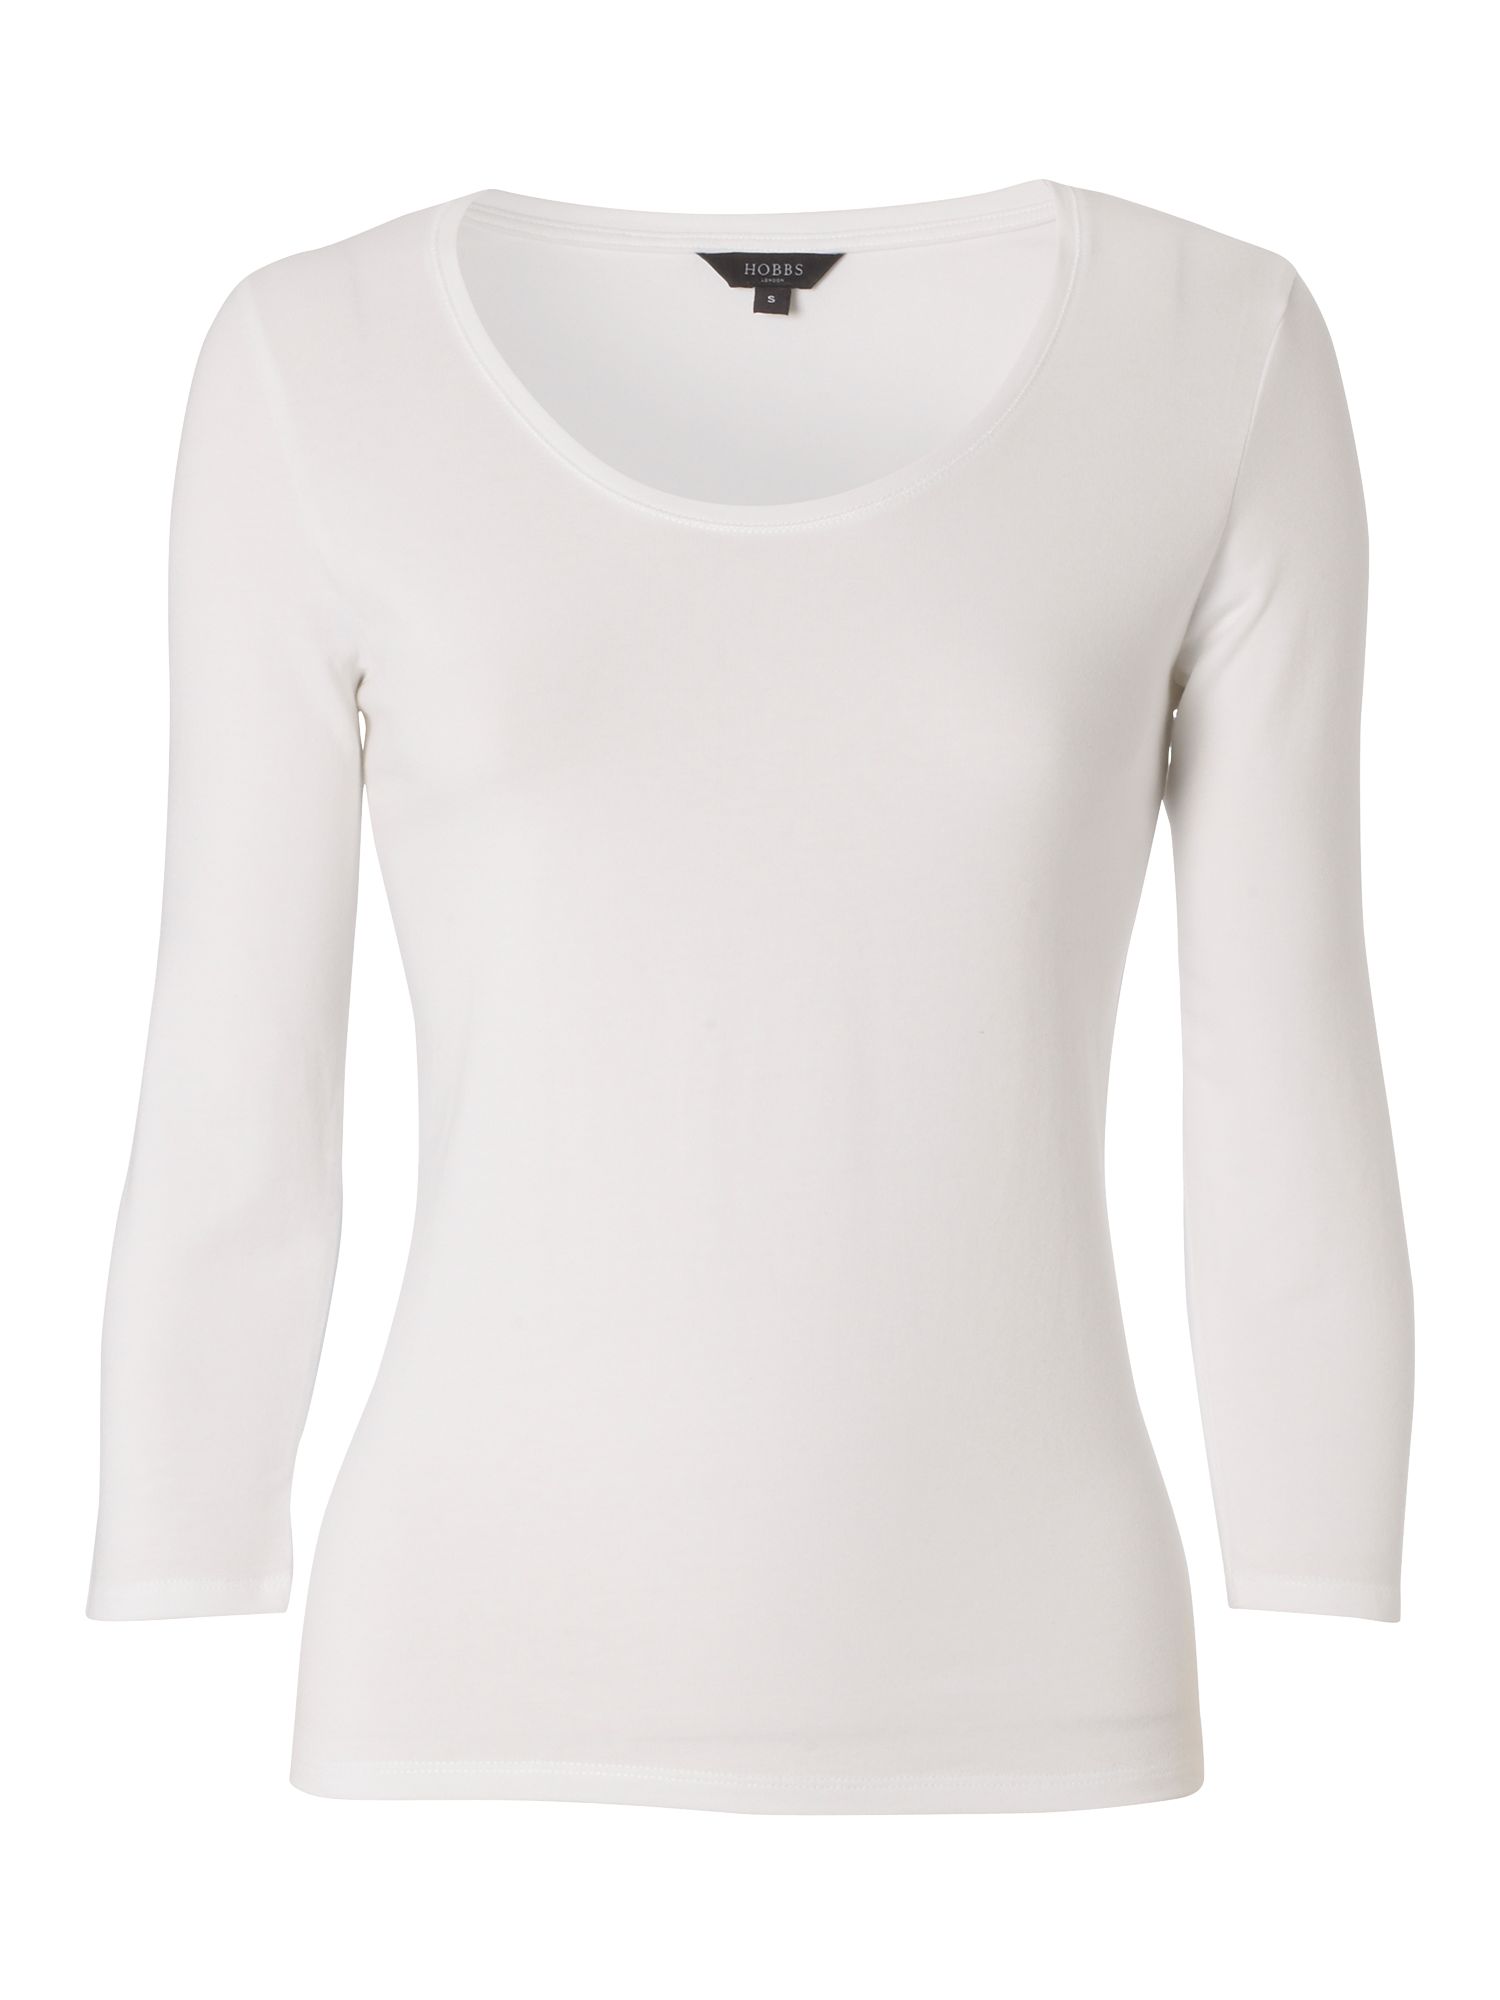 Hilary Long Sleeve T-Shirt, White